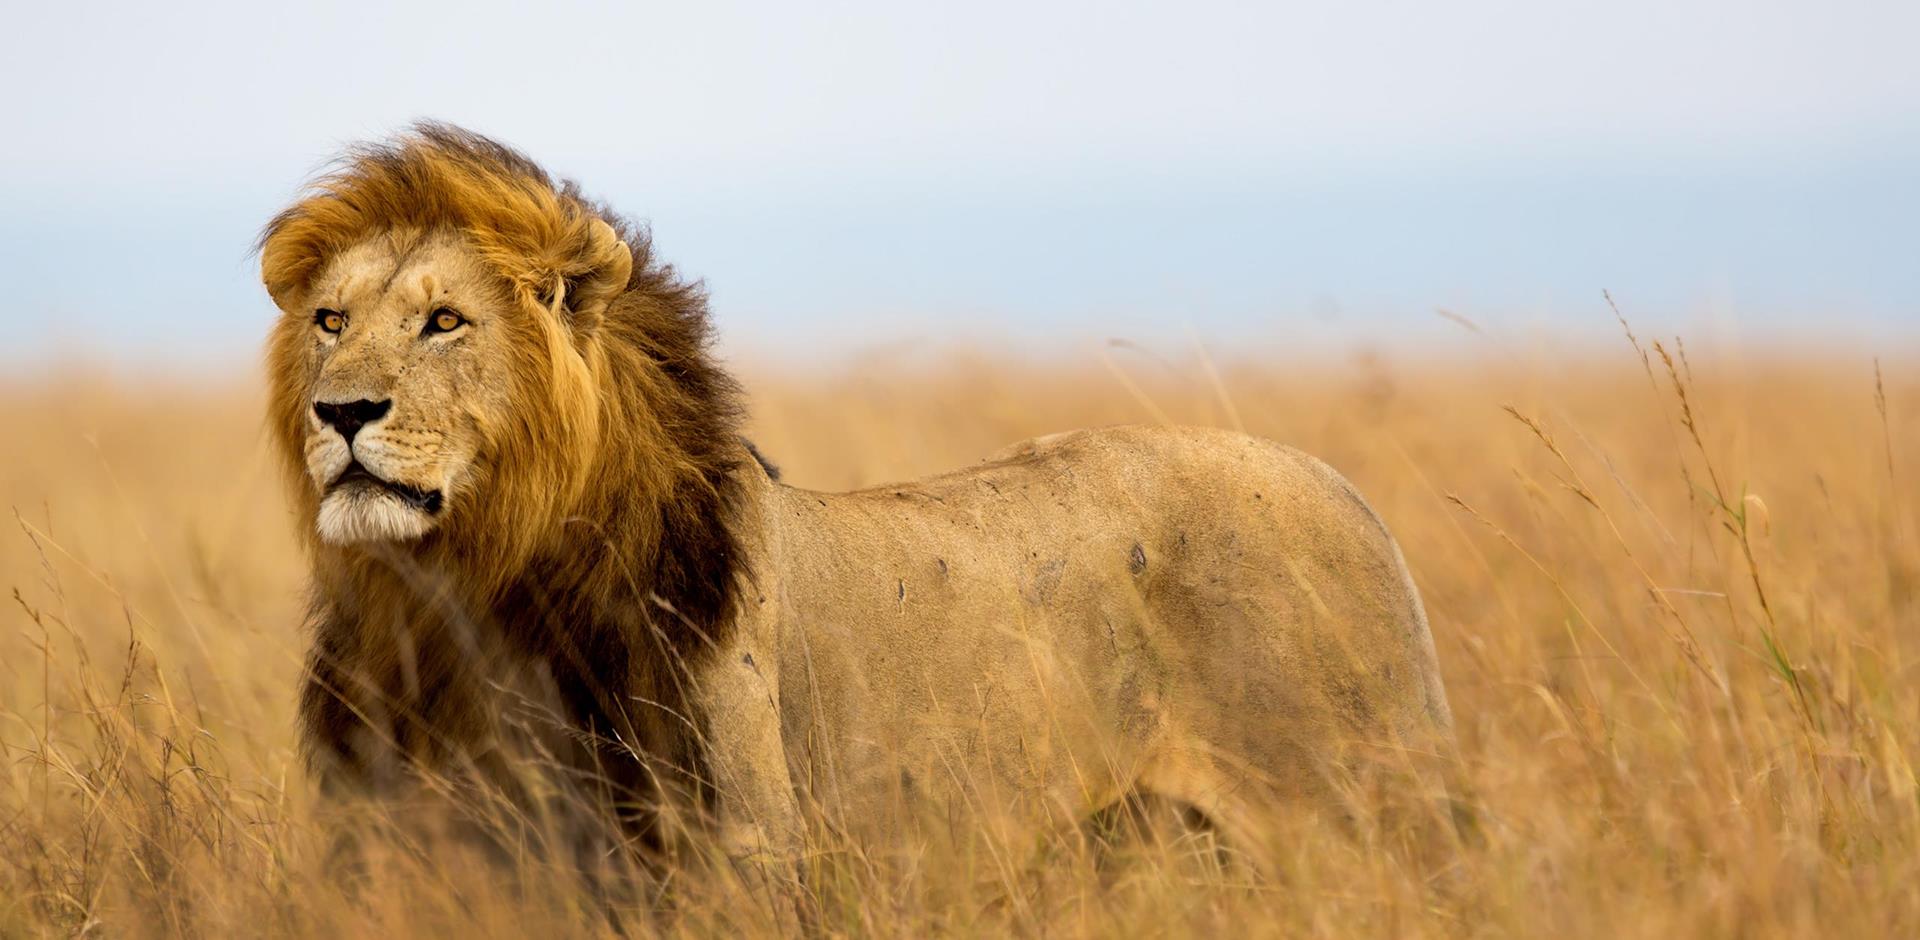 Lion, Masai Mara, Kenya